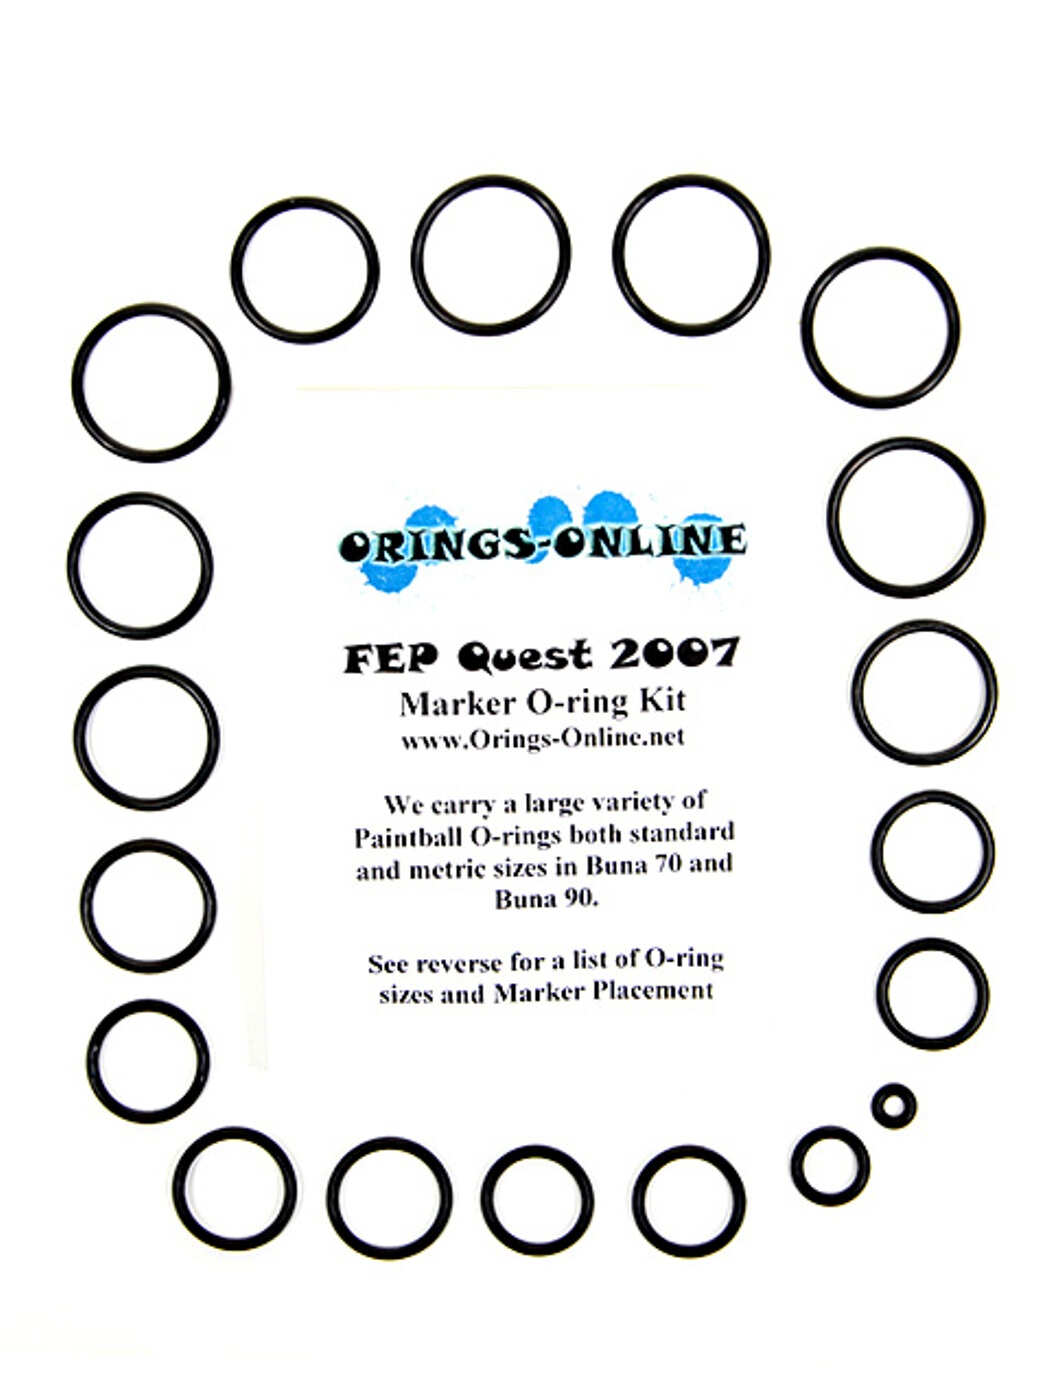 FEP Quest 07 Marker O-ring Kit